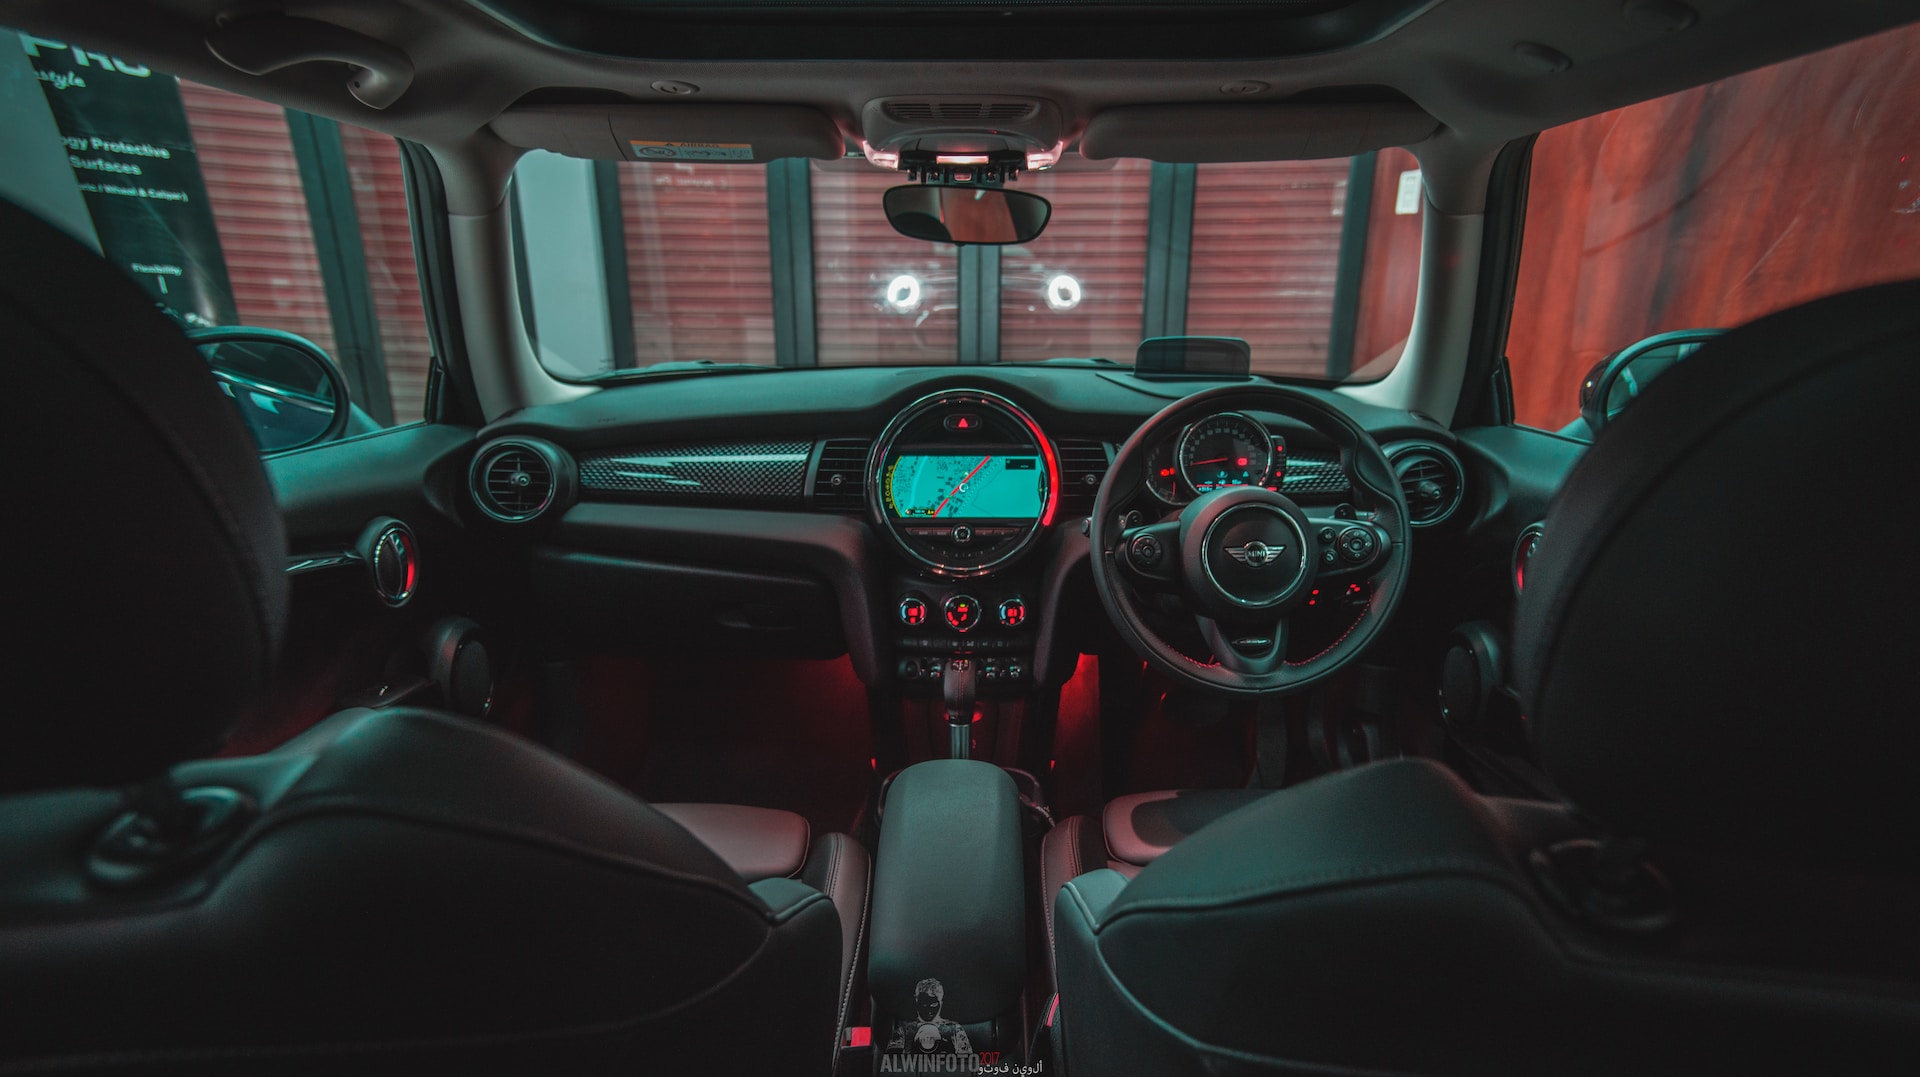 inside of a car